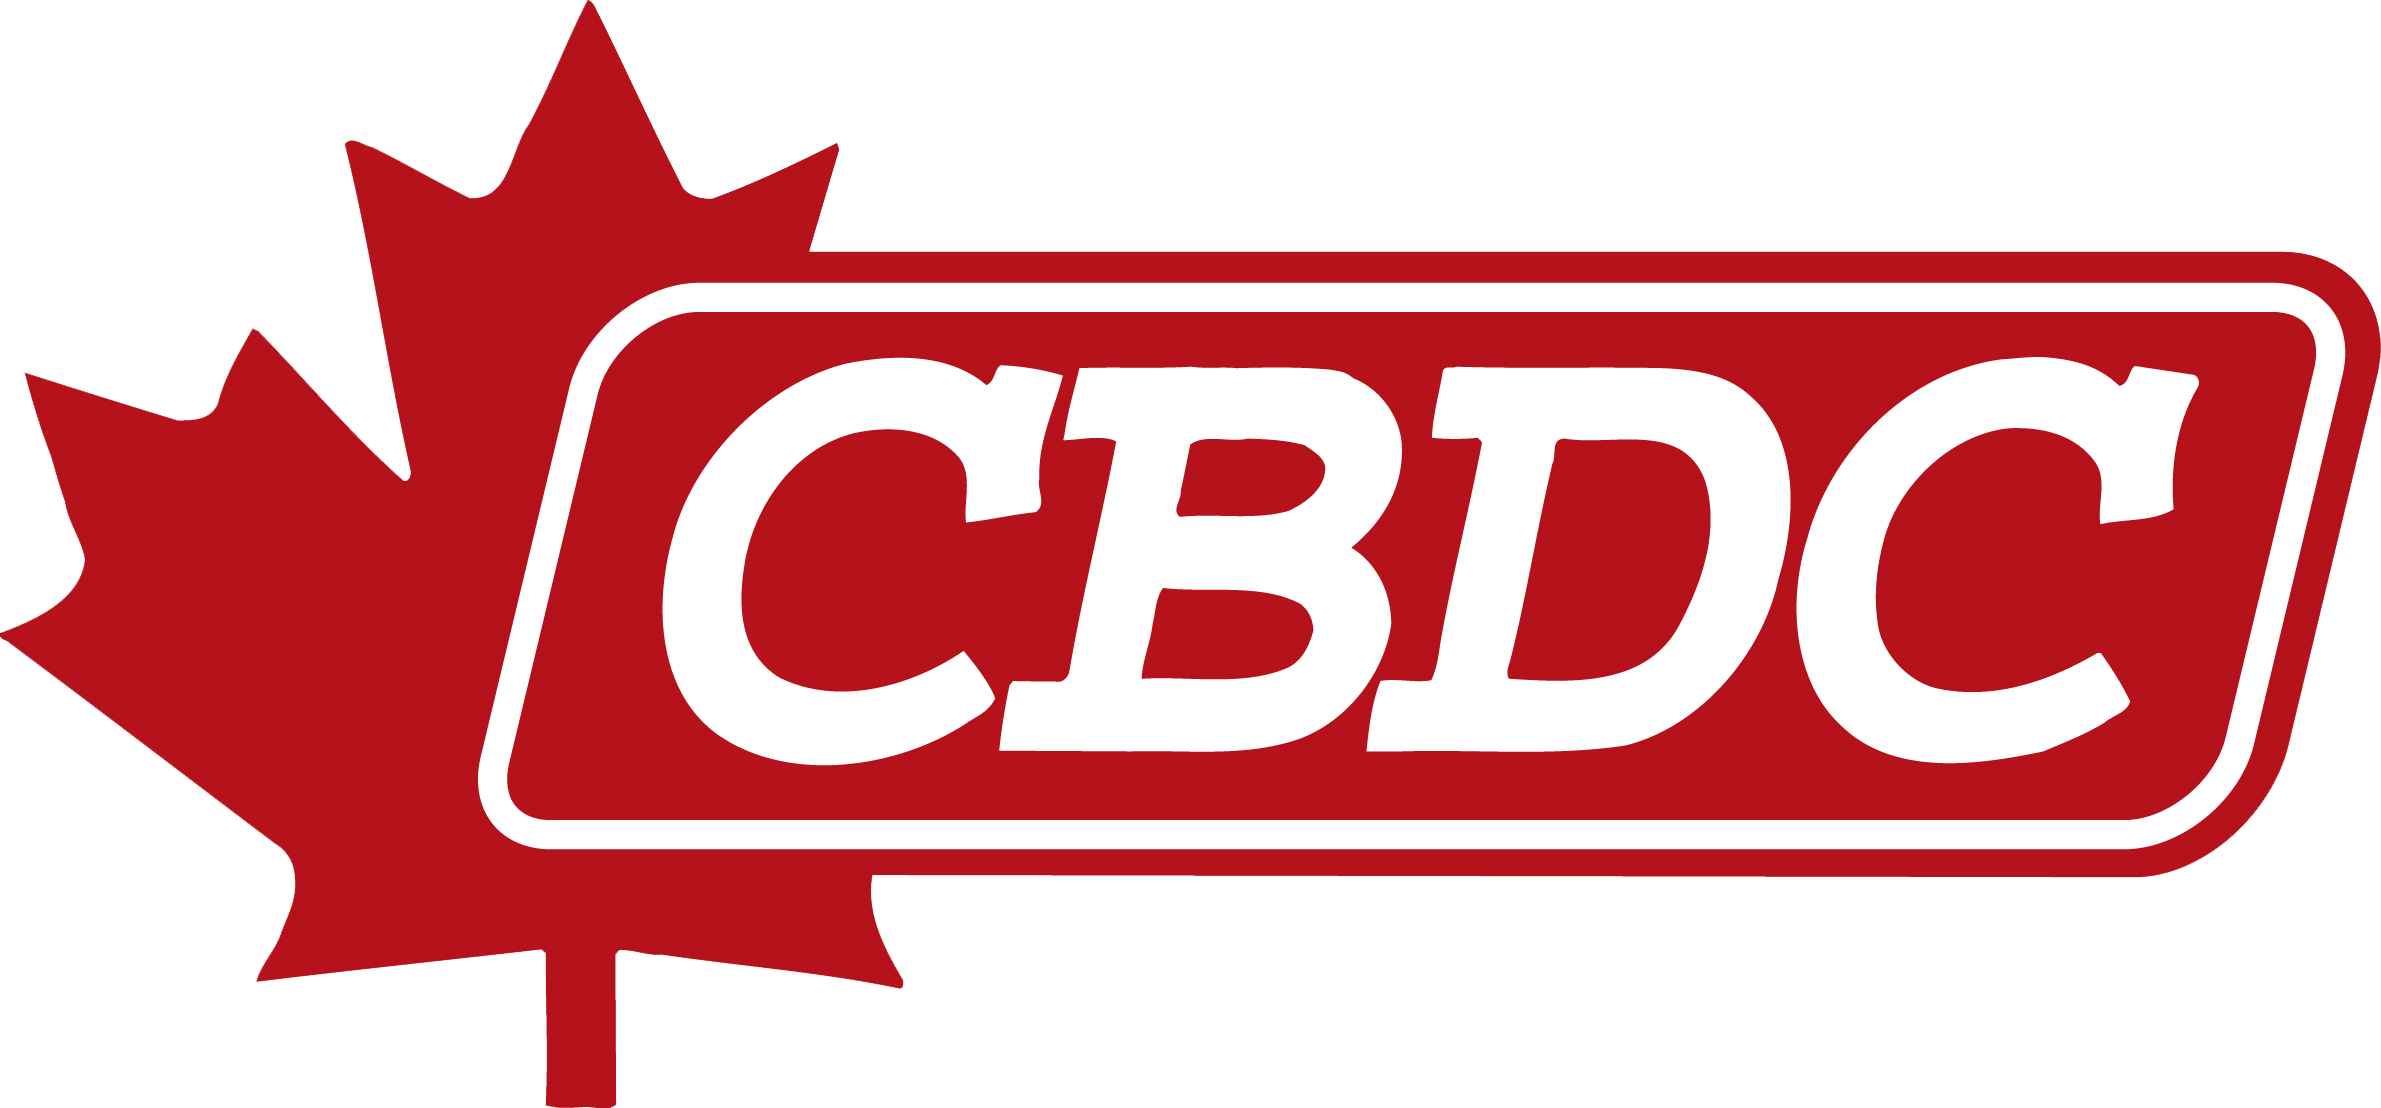 NL Association of CBDCs